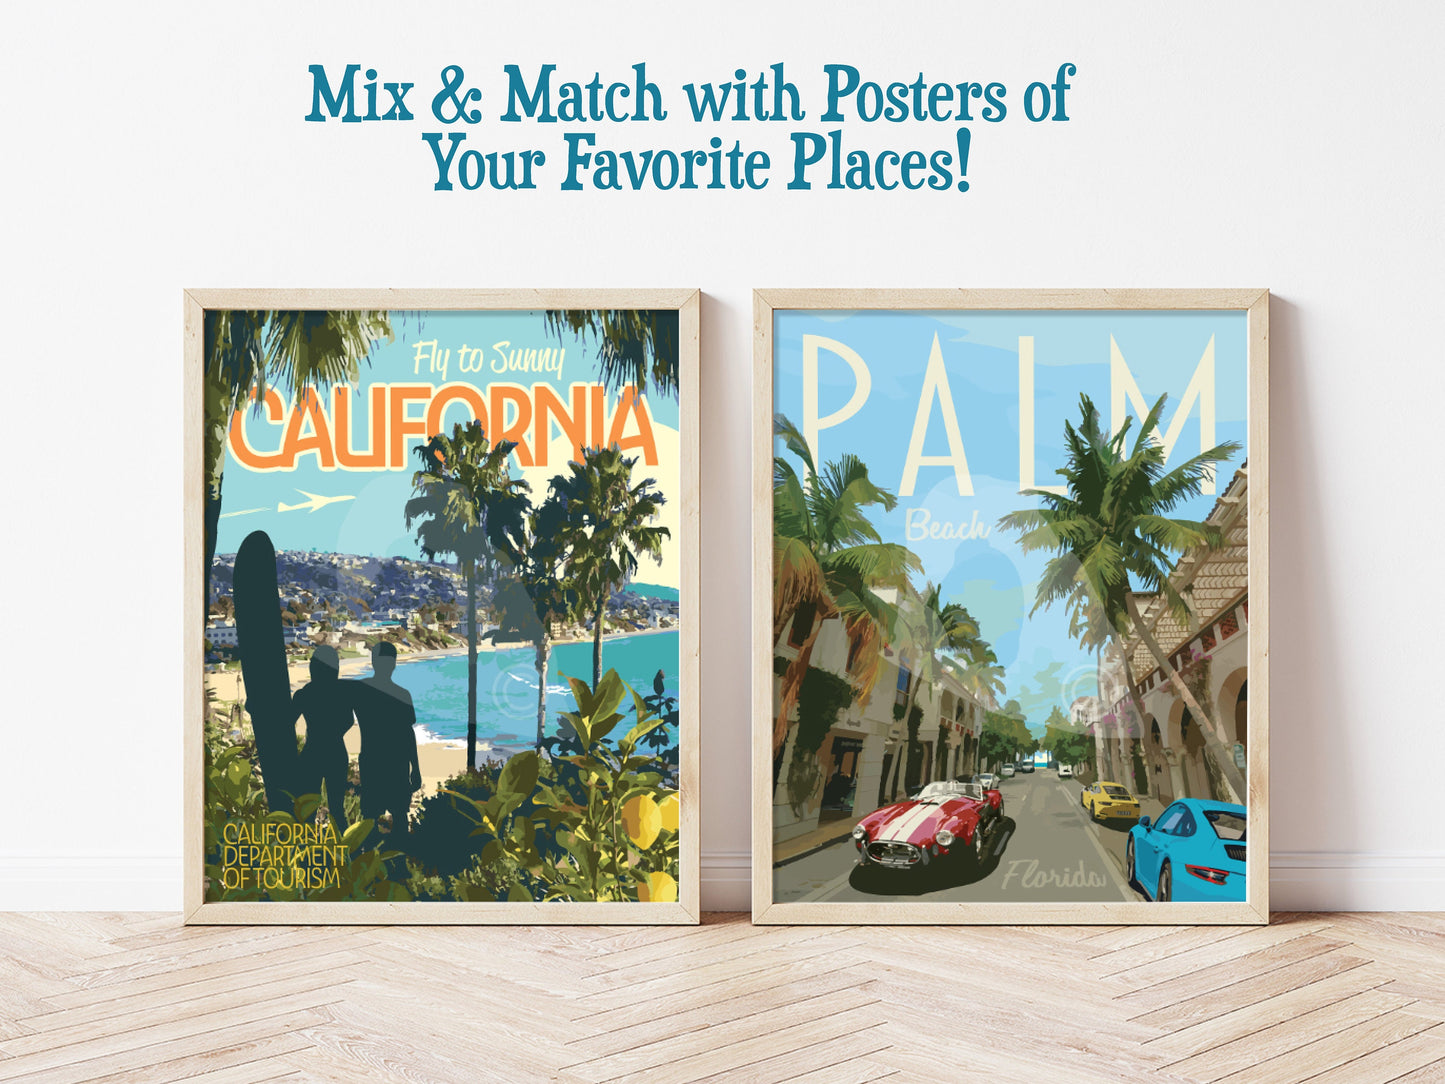 Palm Beach Florida Print, Palm Beach Car Poster, Florida Vintage Style Travel Art